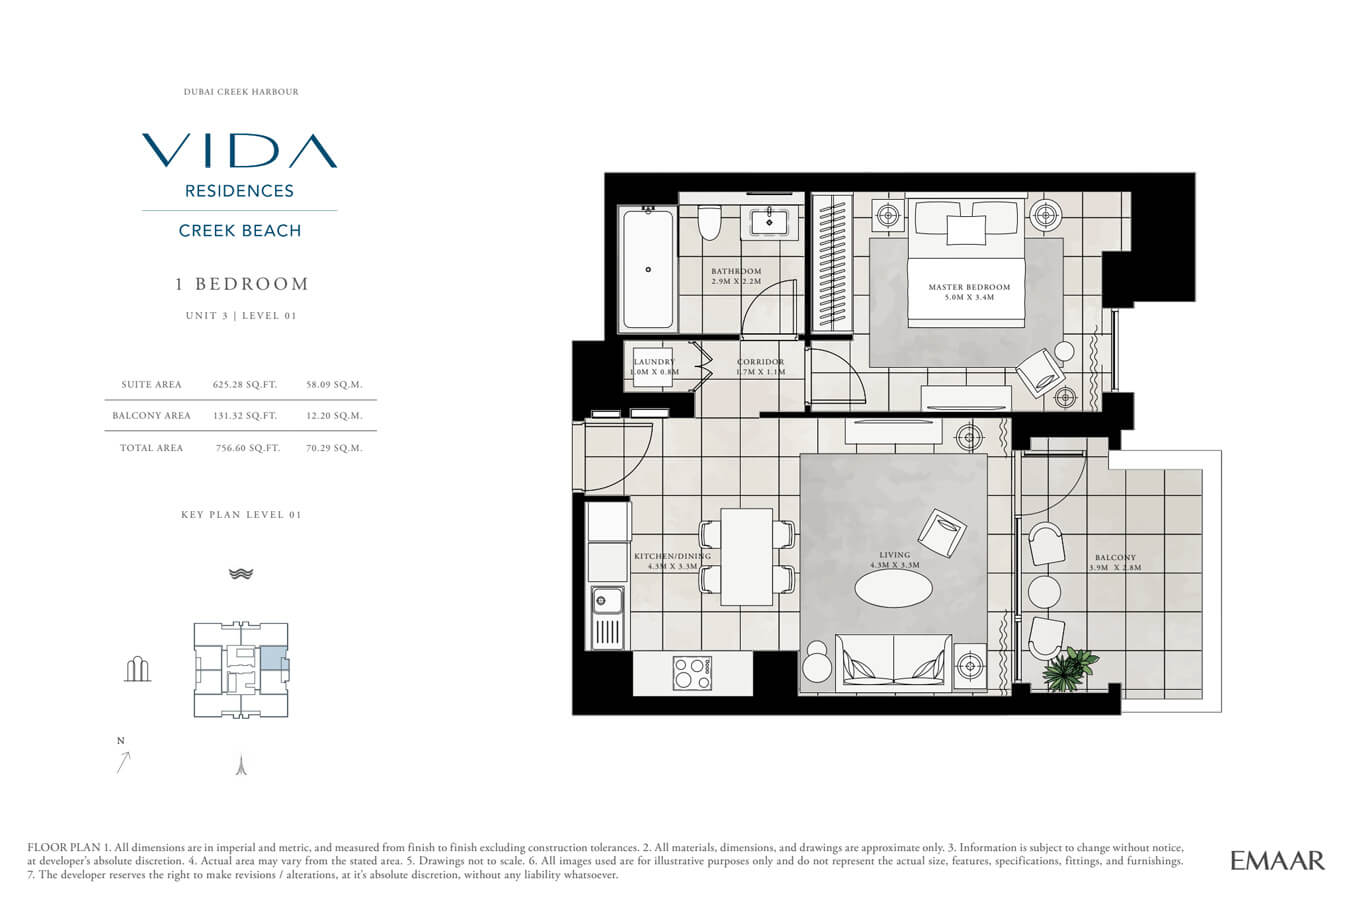 Vida-Residences-Dubai-Creek-Harbour-1-Bedroom-Floor-Plan